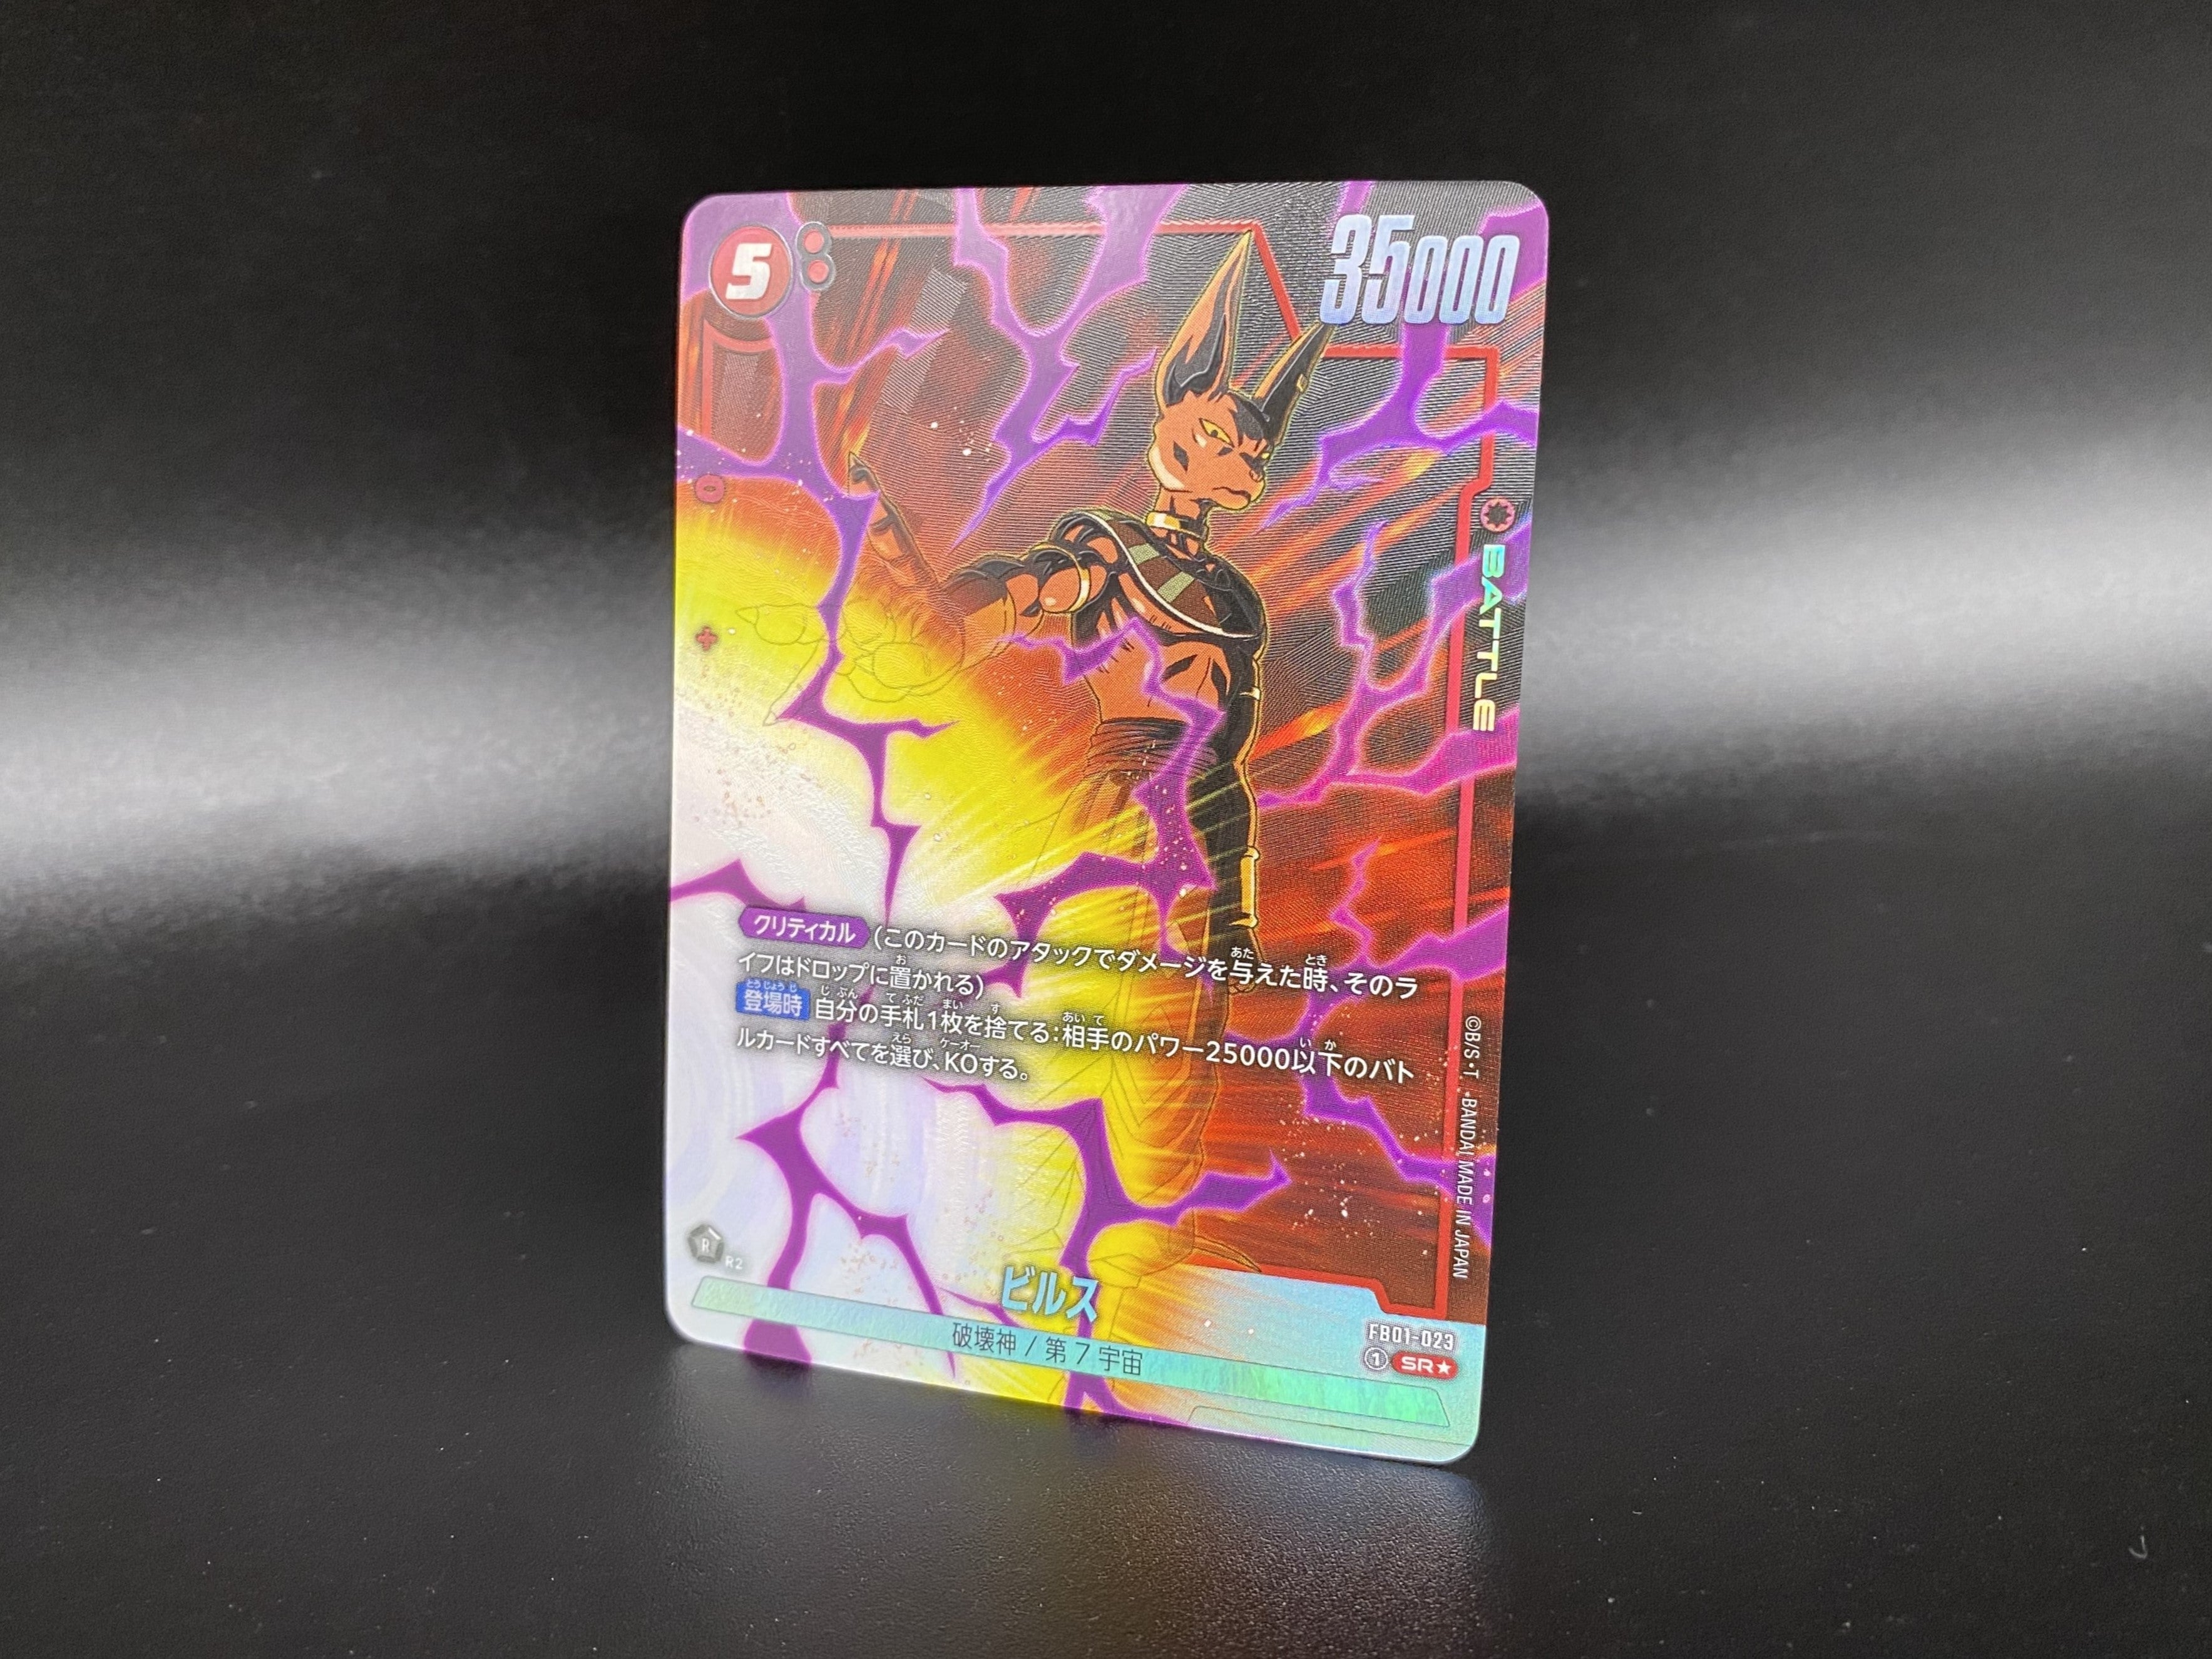 DRAGON BALL SUPER CARD GAME FUSION WORLD - BOX AWAKENED PULSE [FB01]